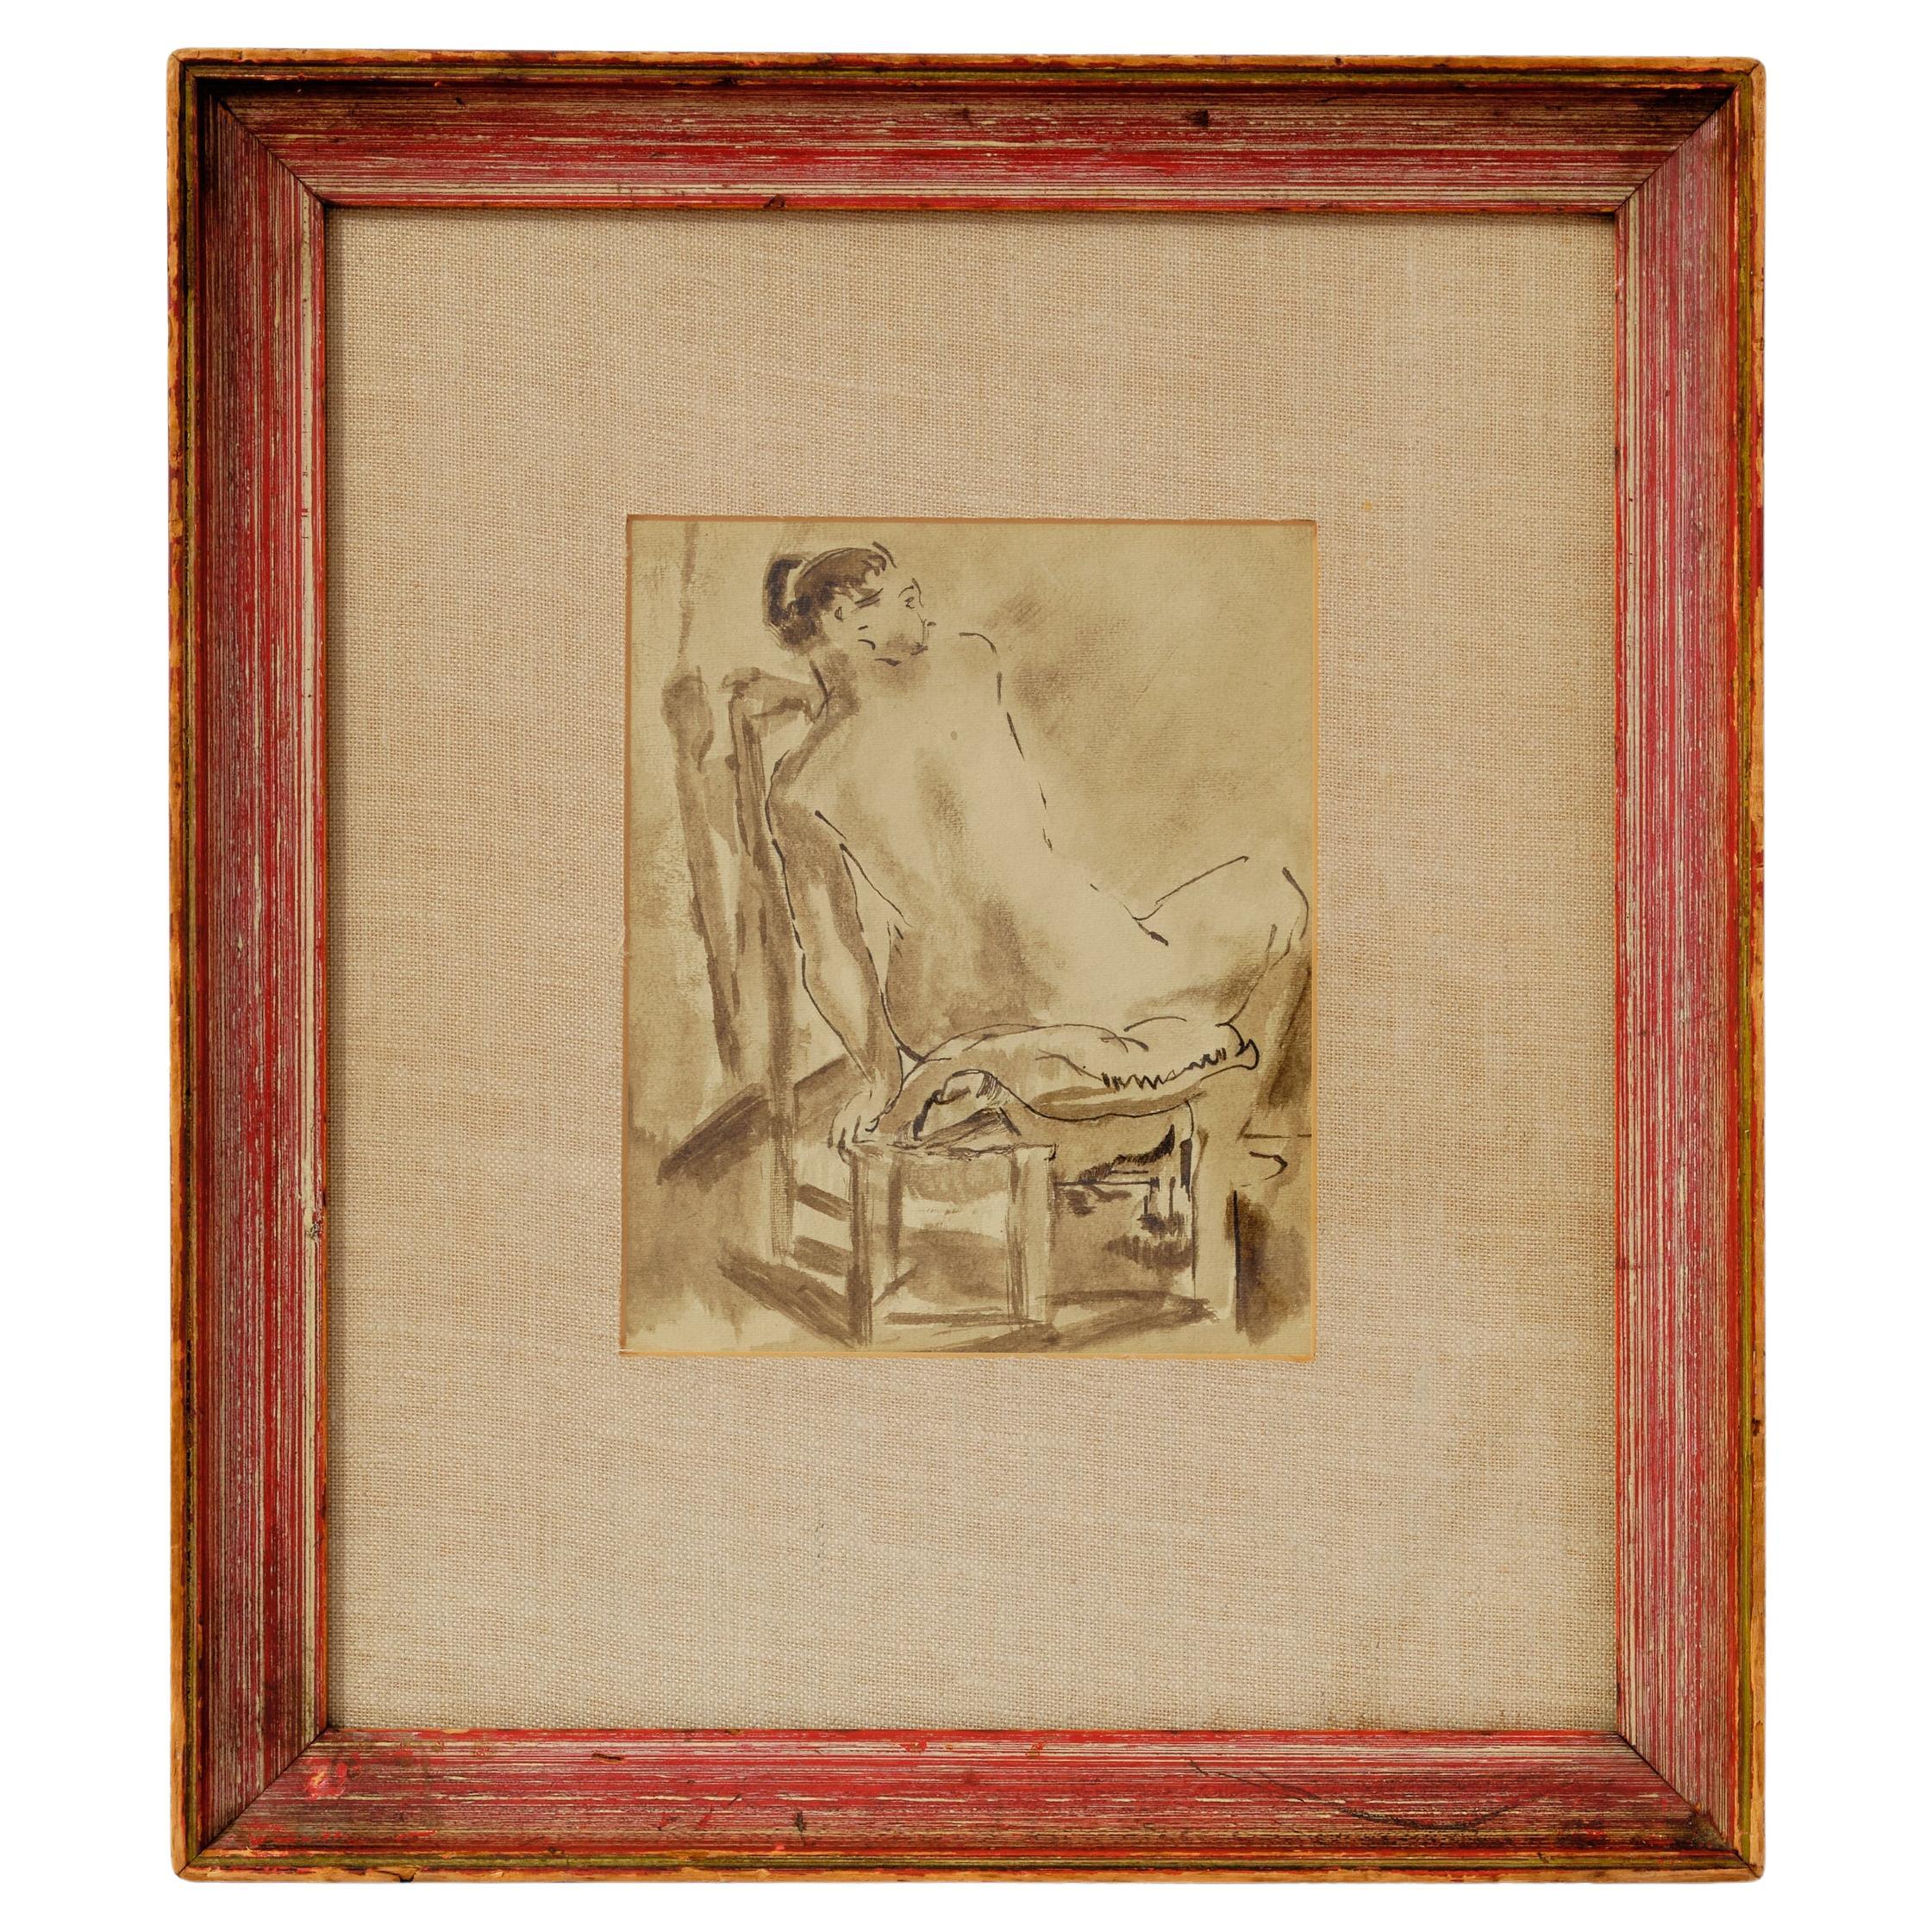 Nude Painting, Ink Wash, C 1950, Back View, Original Framing, Wood Frame